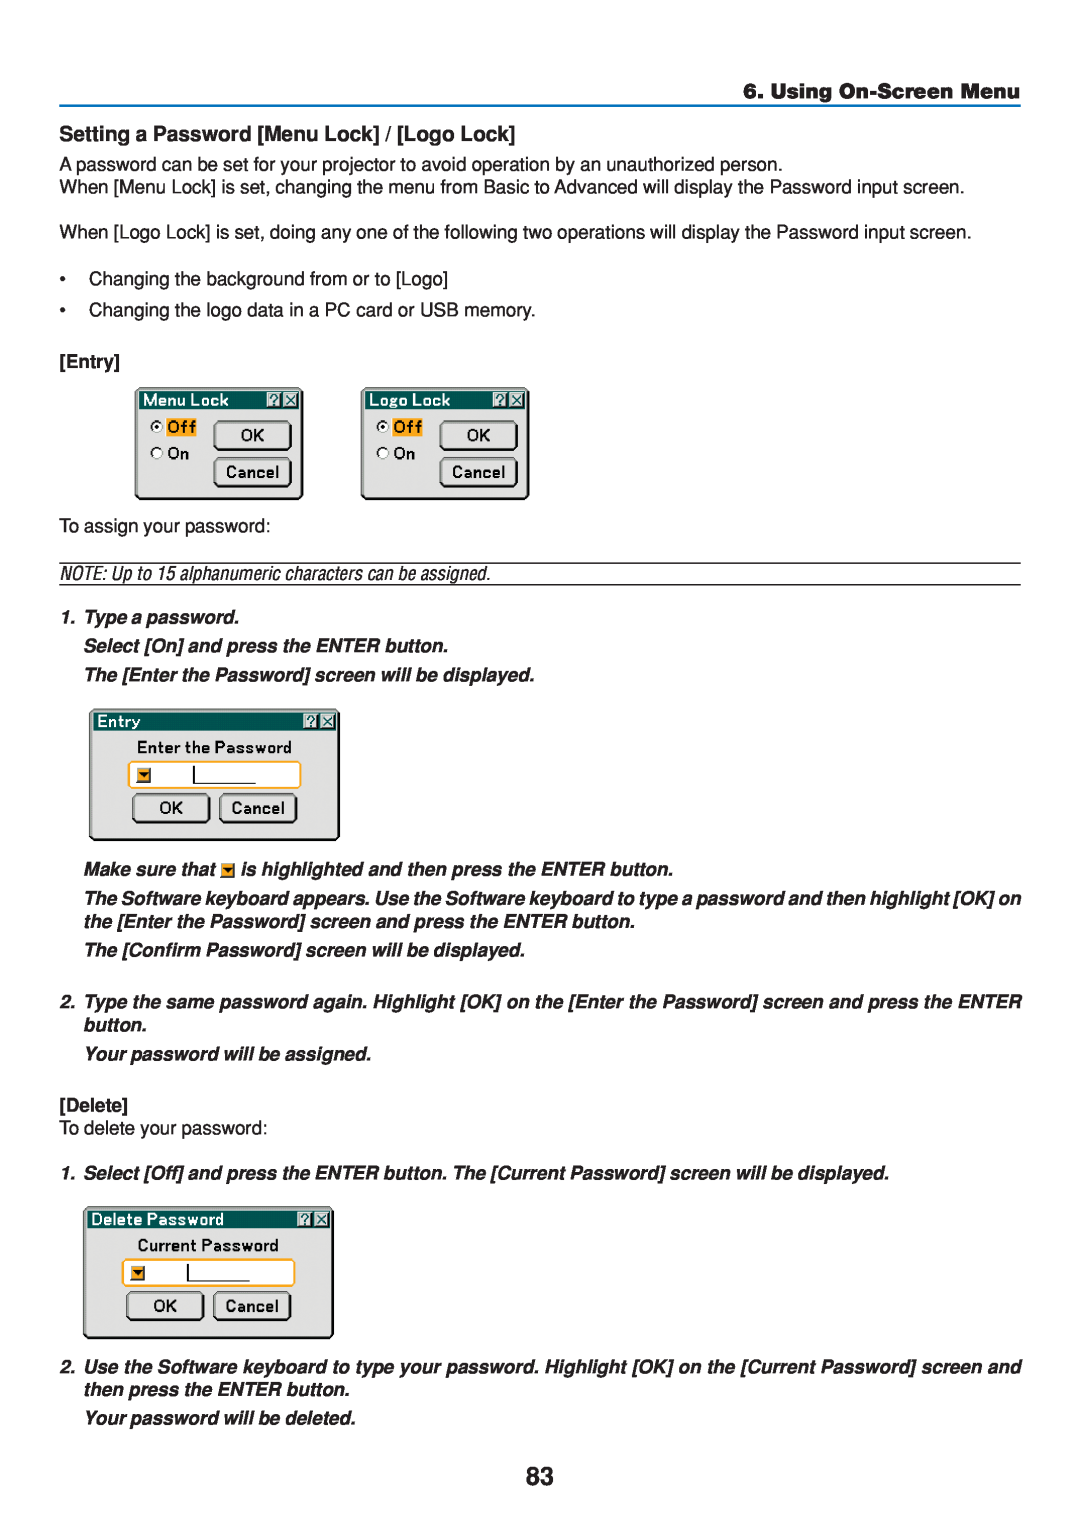 Dukane 8808 user manual Setting a Password Menu Lock / Logo Lock, Using On-Screen Menu, Entry, Delete 